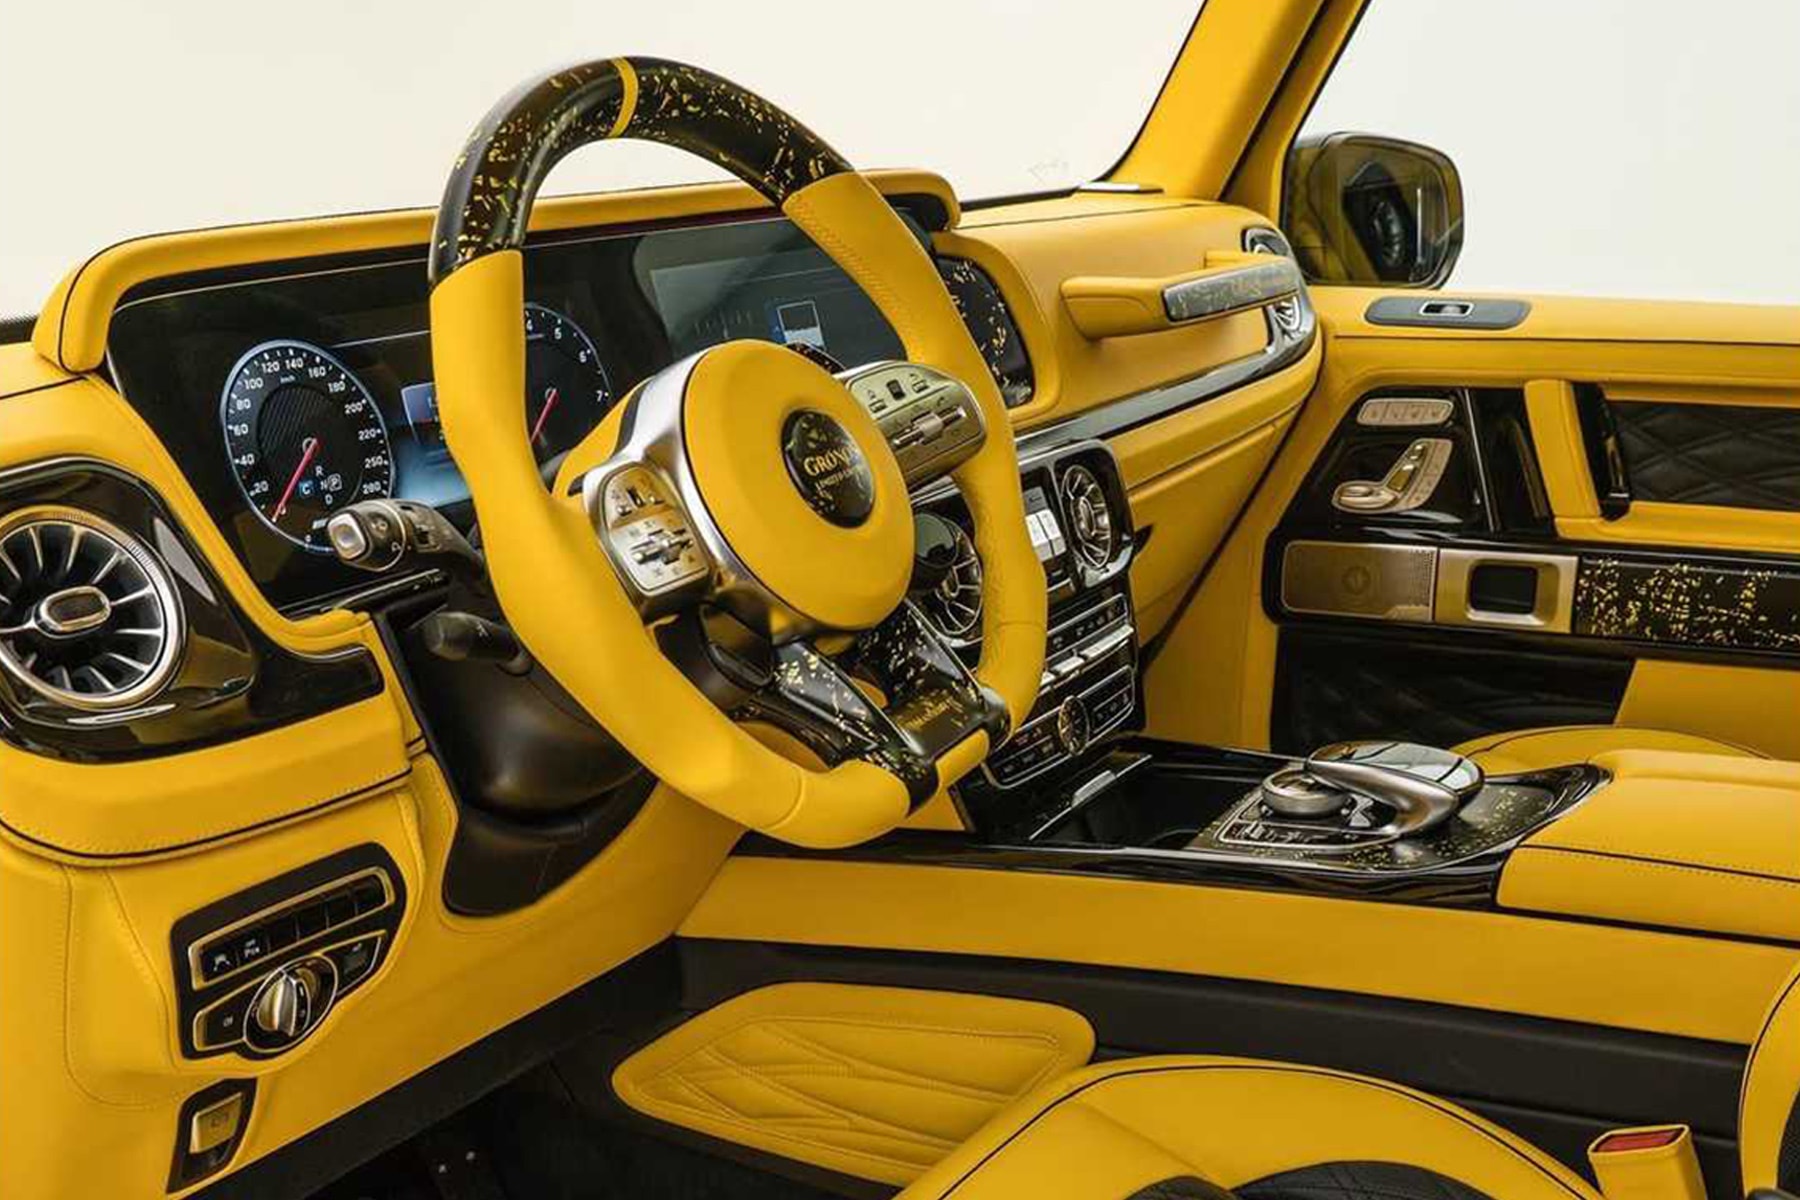 Mansory 打造全球限量 10 輛 Mercedes-AMG G63「大黃蜂」改裝車型